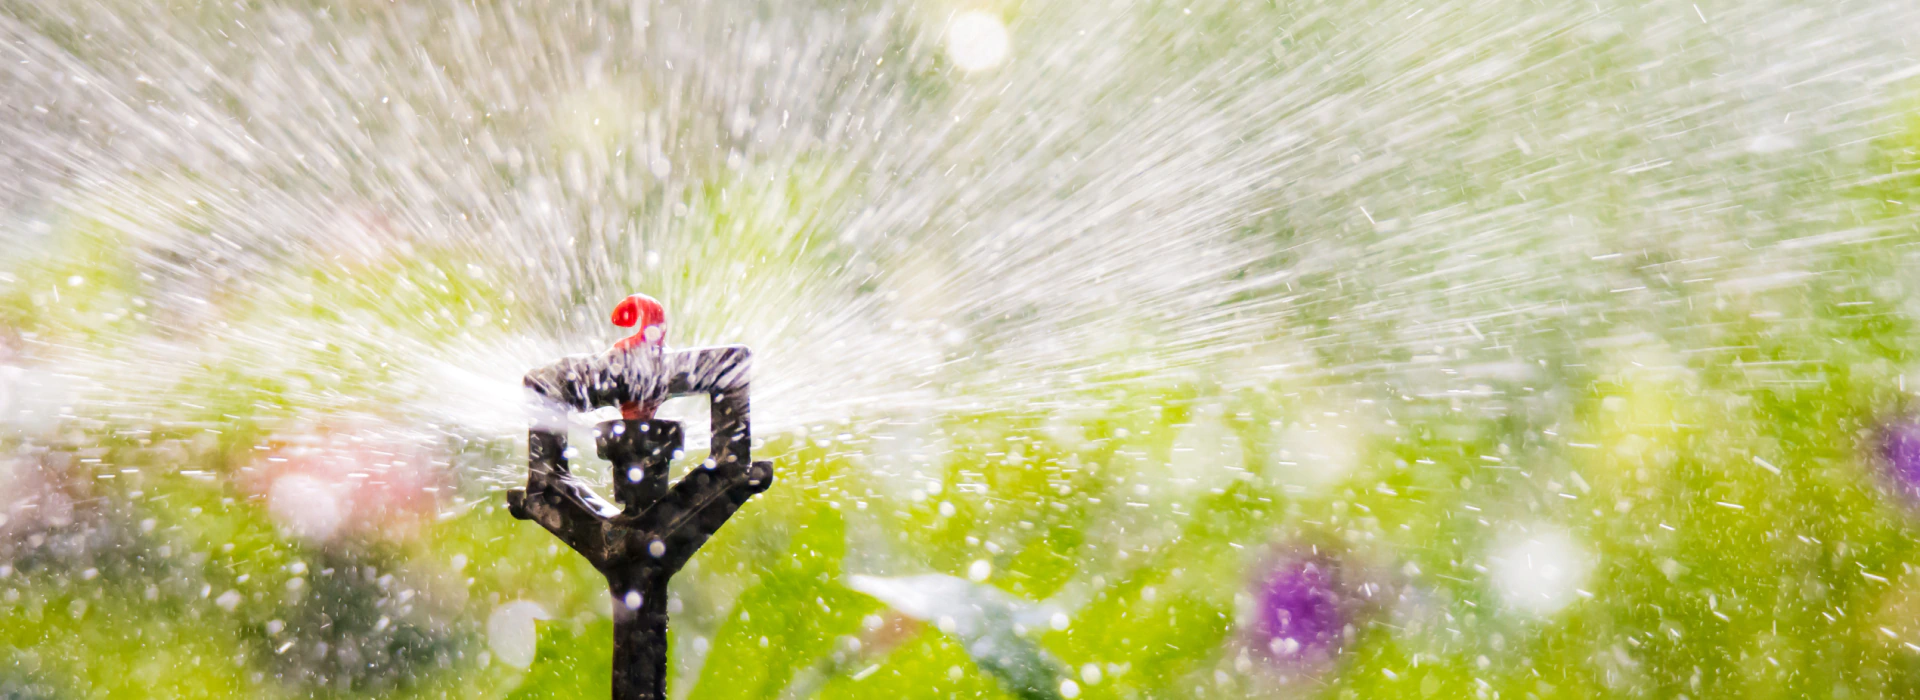 close up of water sprinkler